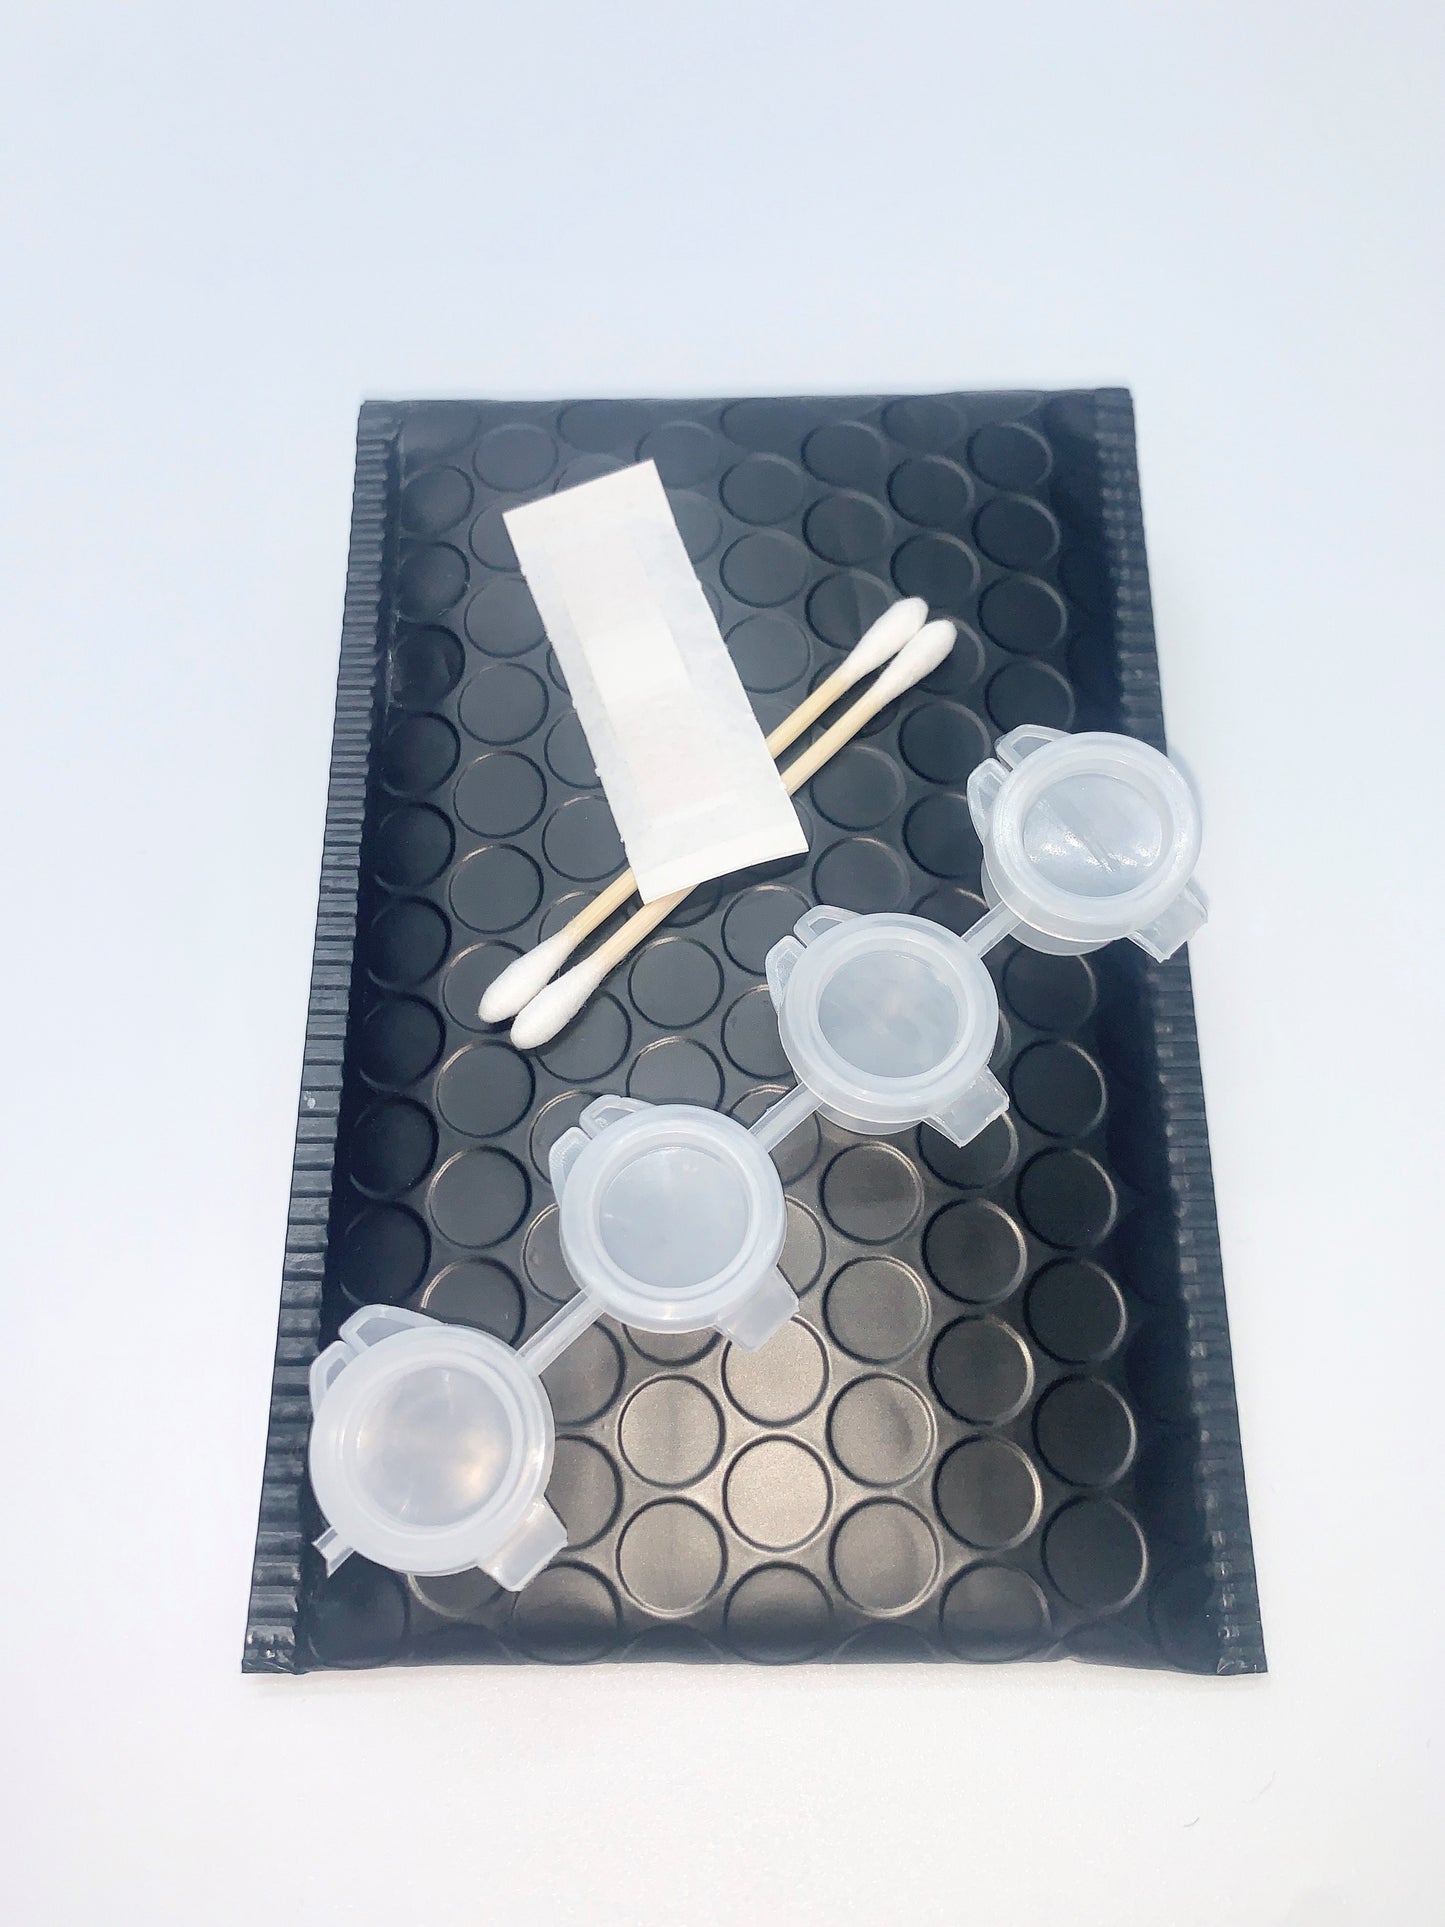 Patch Test for Lash Glue/Lash Lift & Brow Lamination/Henna/Tint